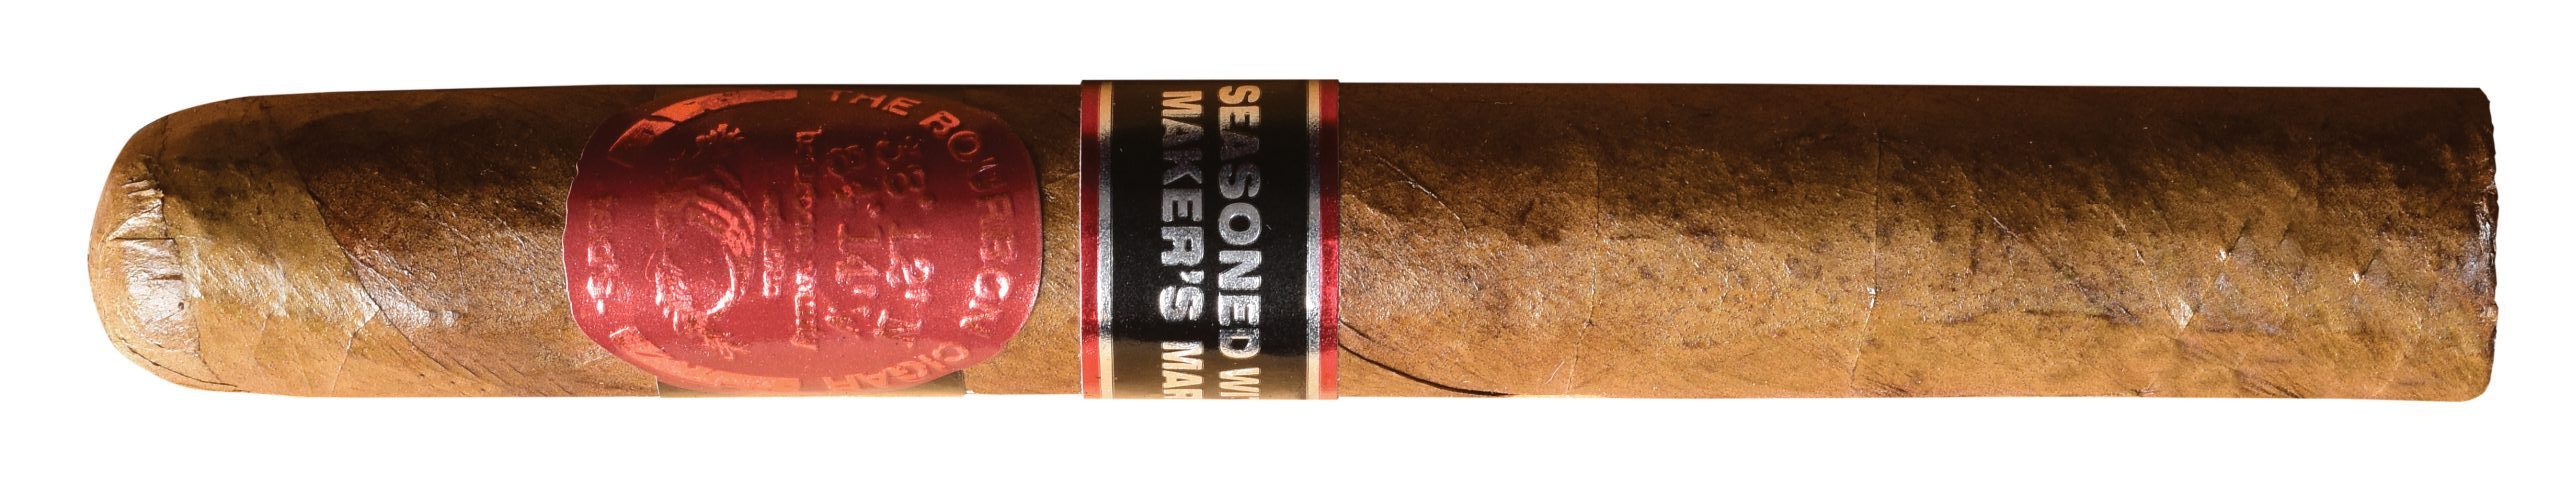 makers mark cigar single